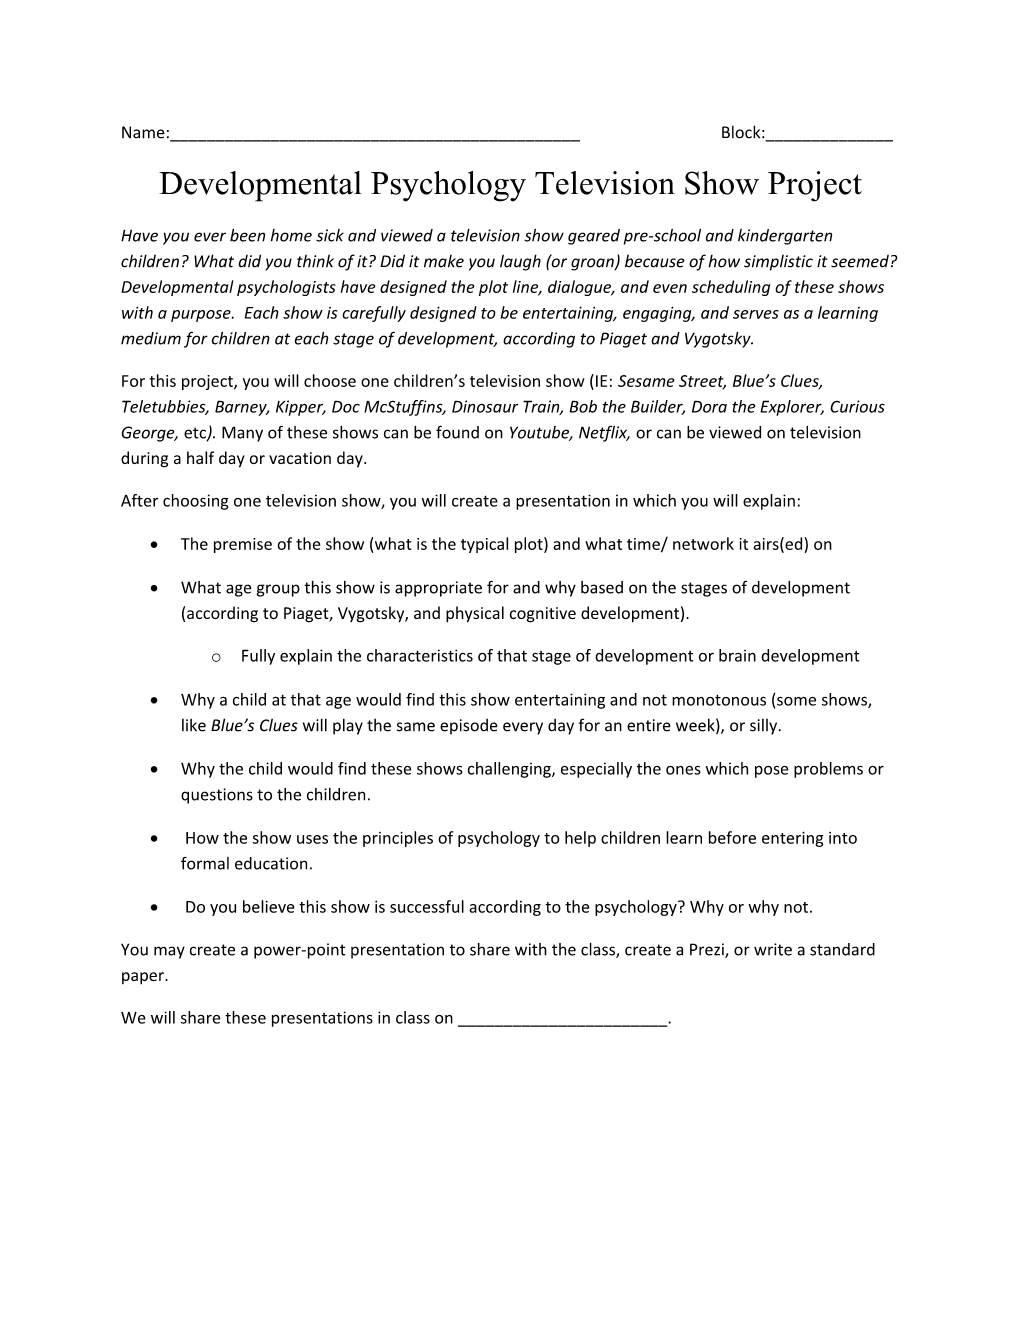 Developmental Psychology Television Show Project